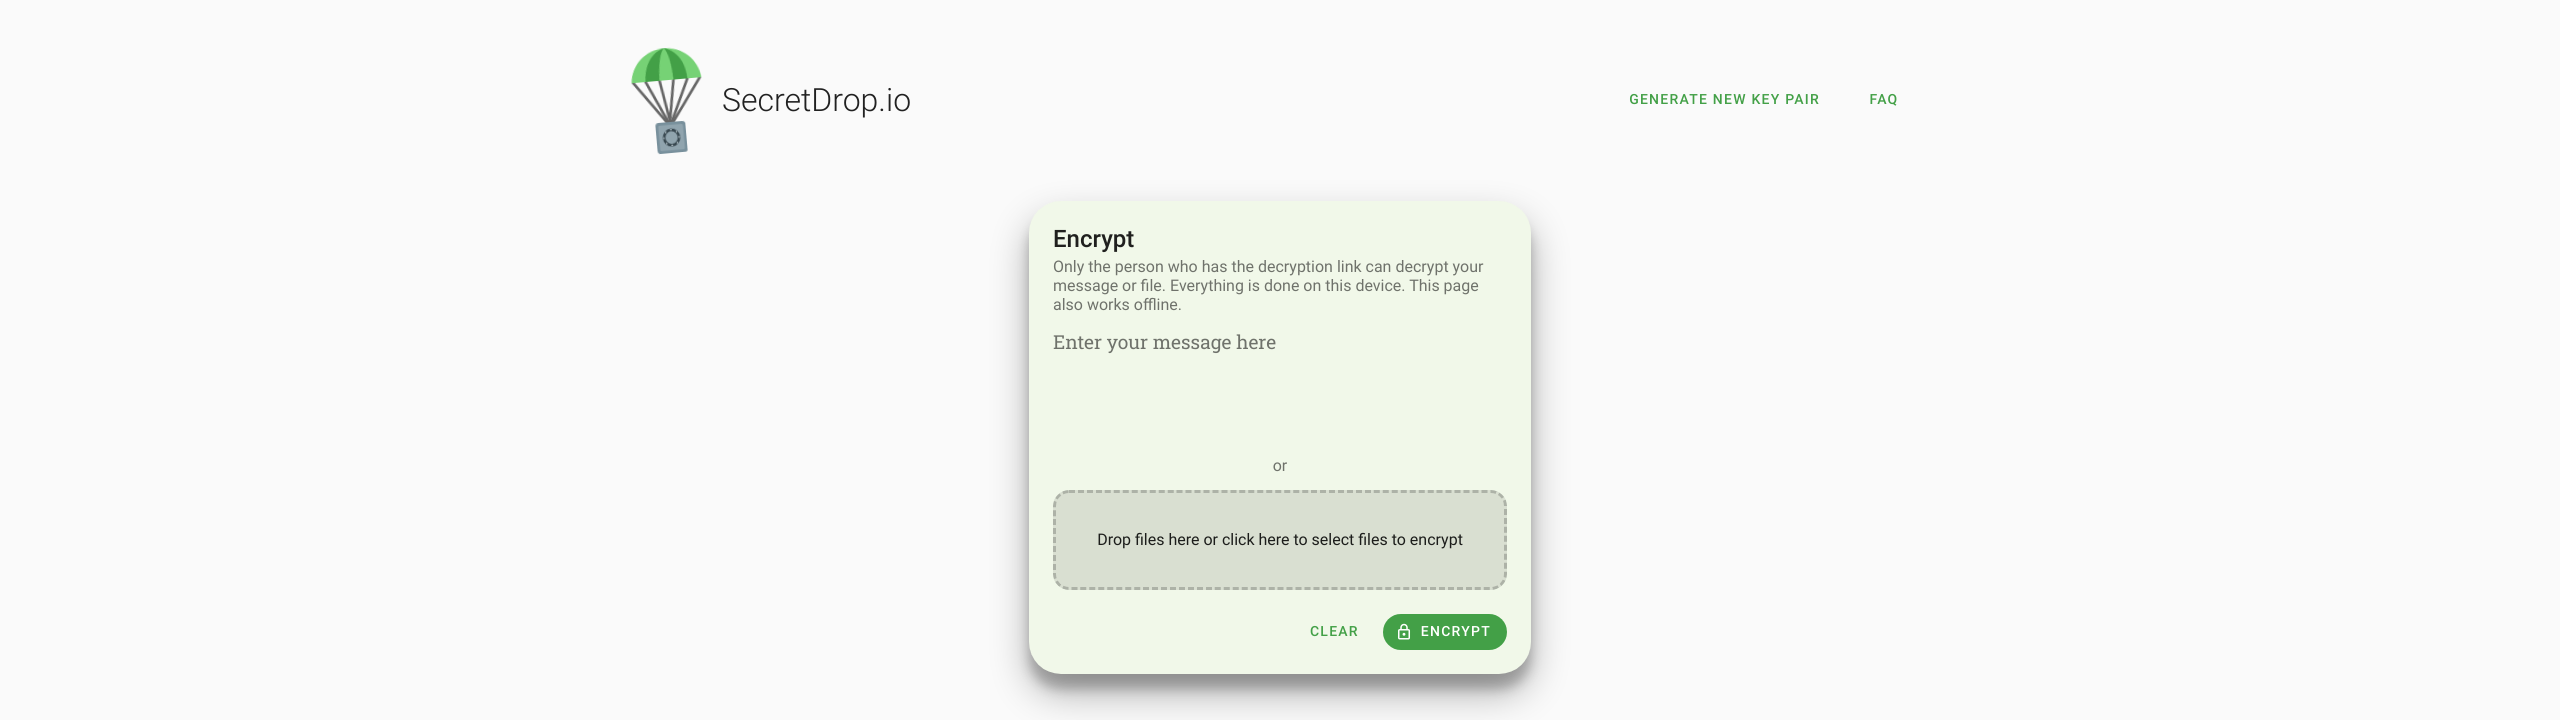 main-test-ts-encrypt-decrypt-encrypt-page-file-encryption-screenshot-2560-720-0-snap.png